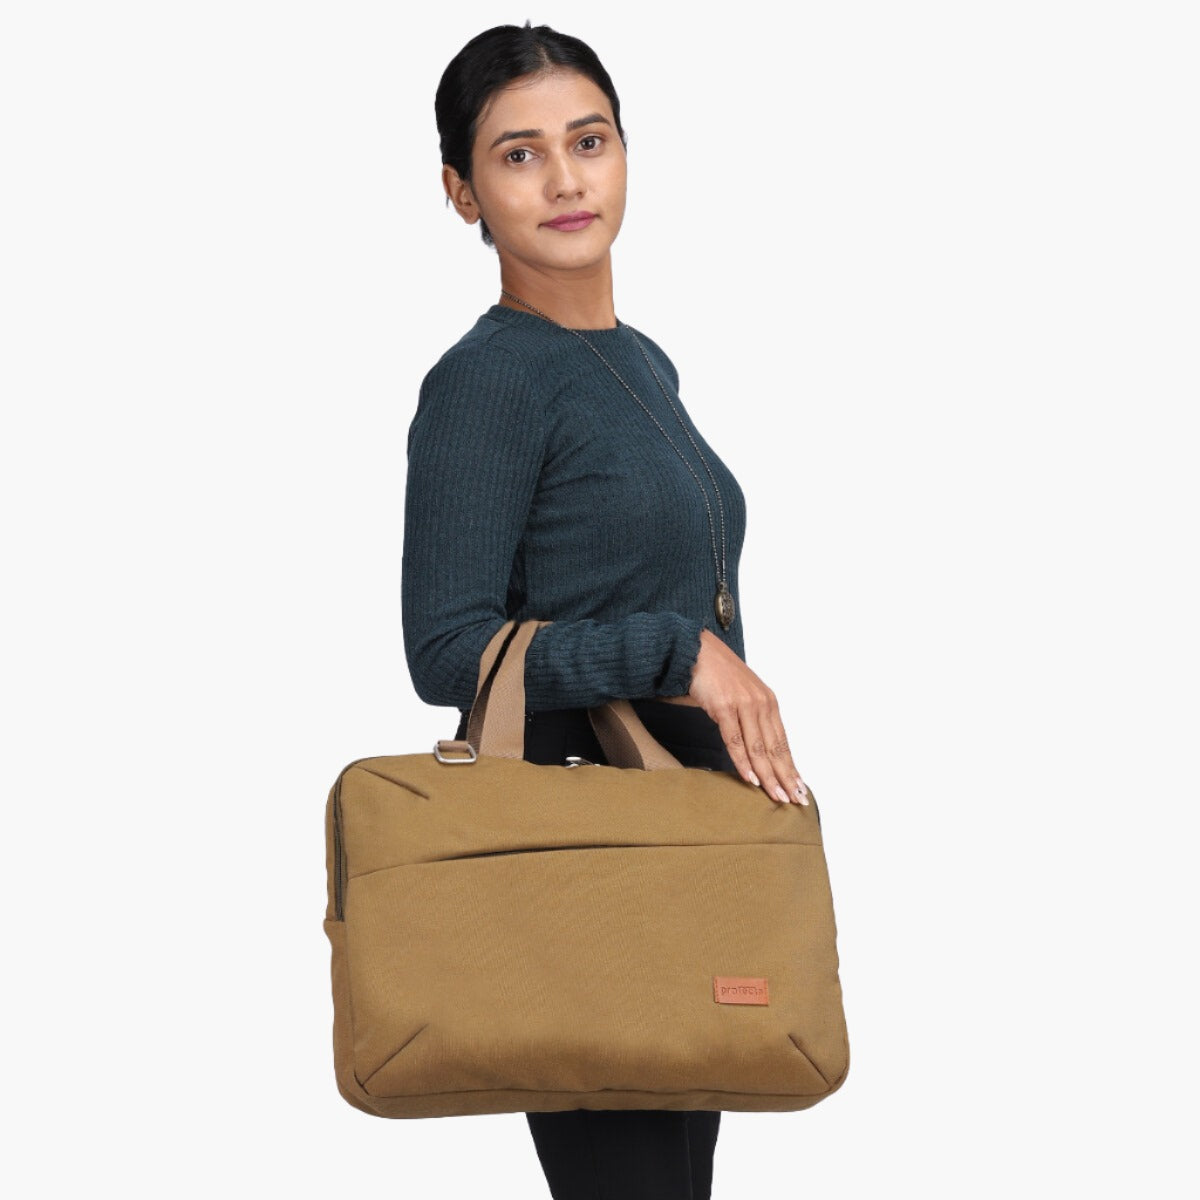 Khaki | Protecta High Pedestal Office Laptop Bag - 5